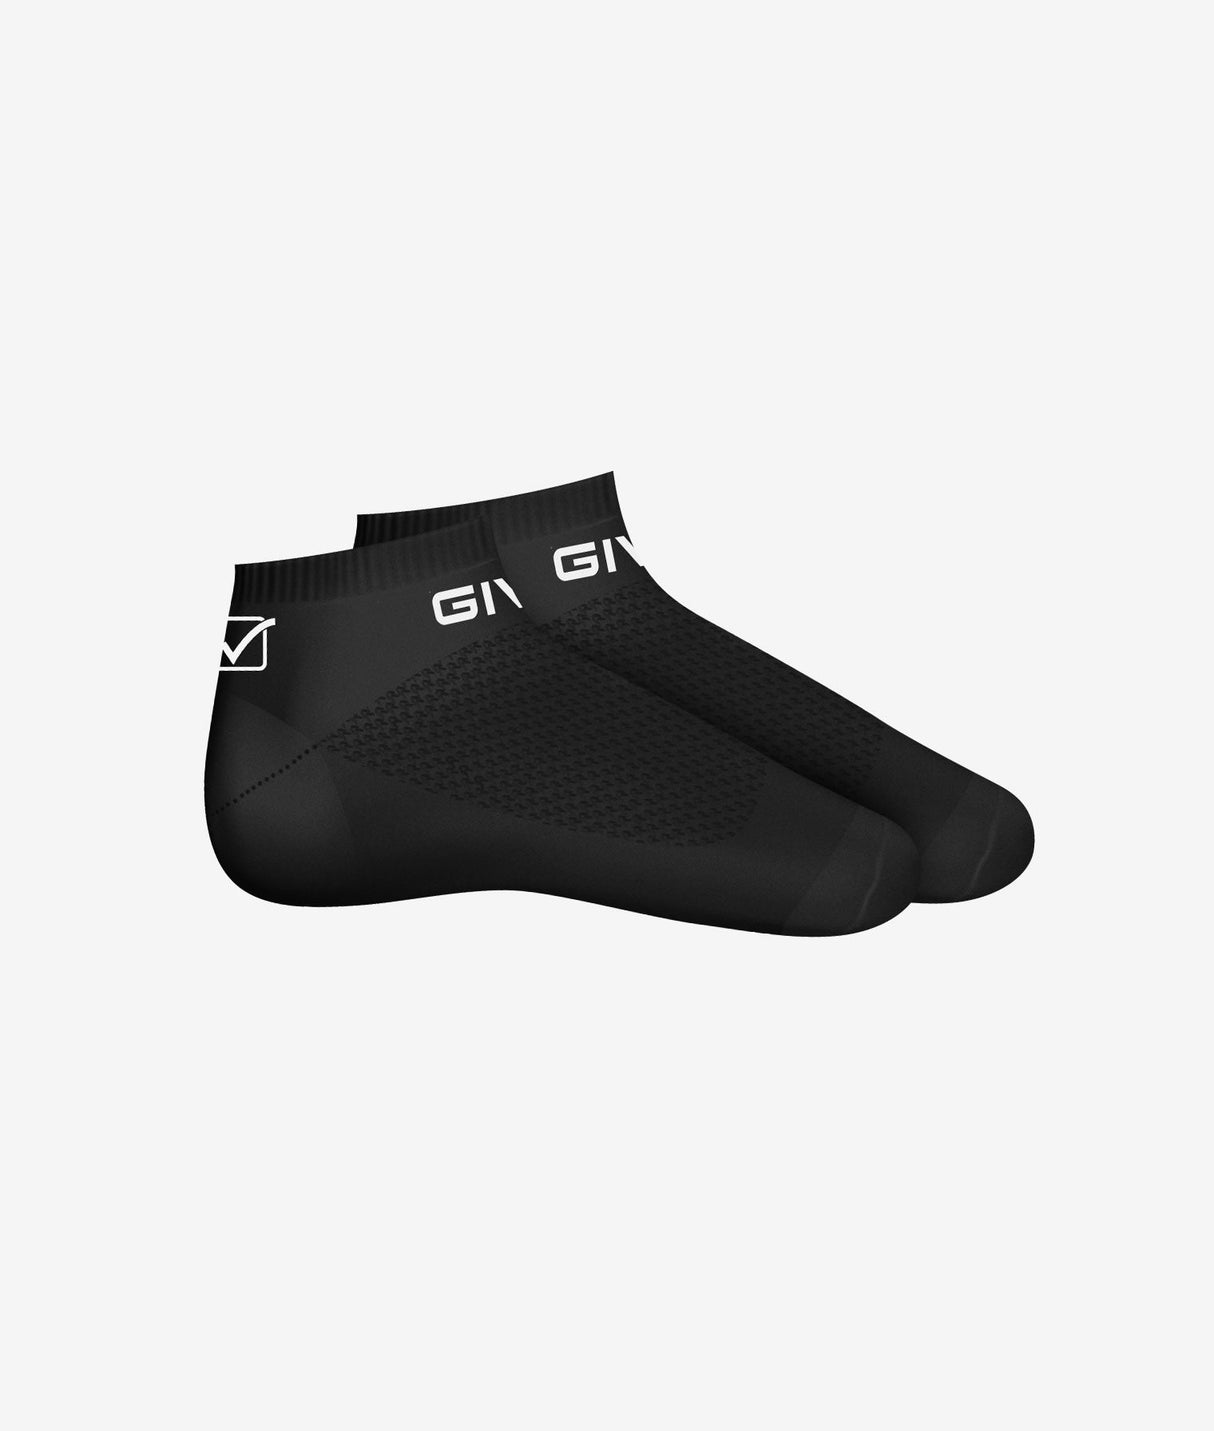 Givova TRIS Socken - schwarz, C032-1003